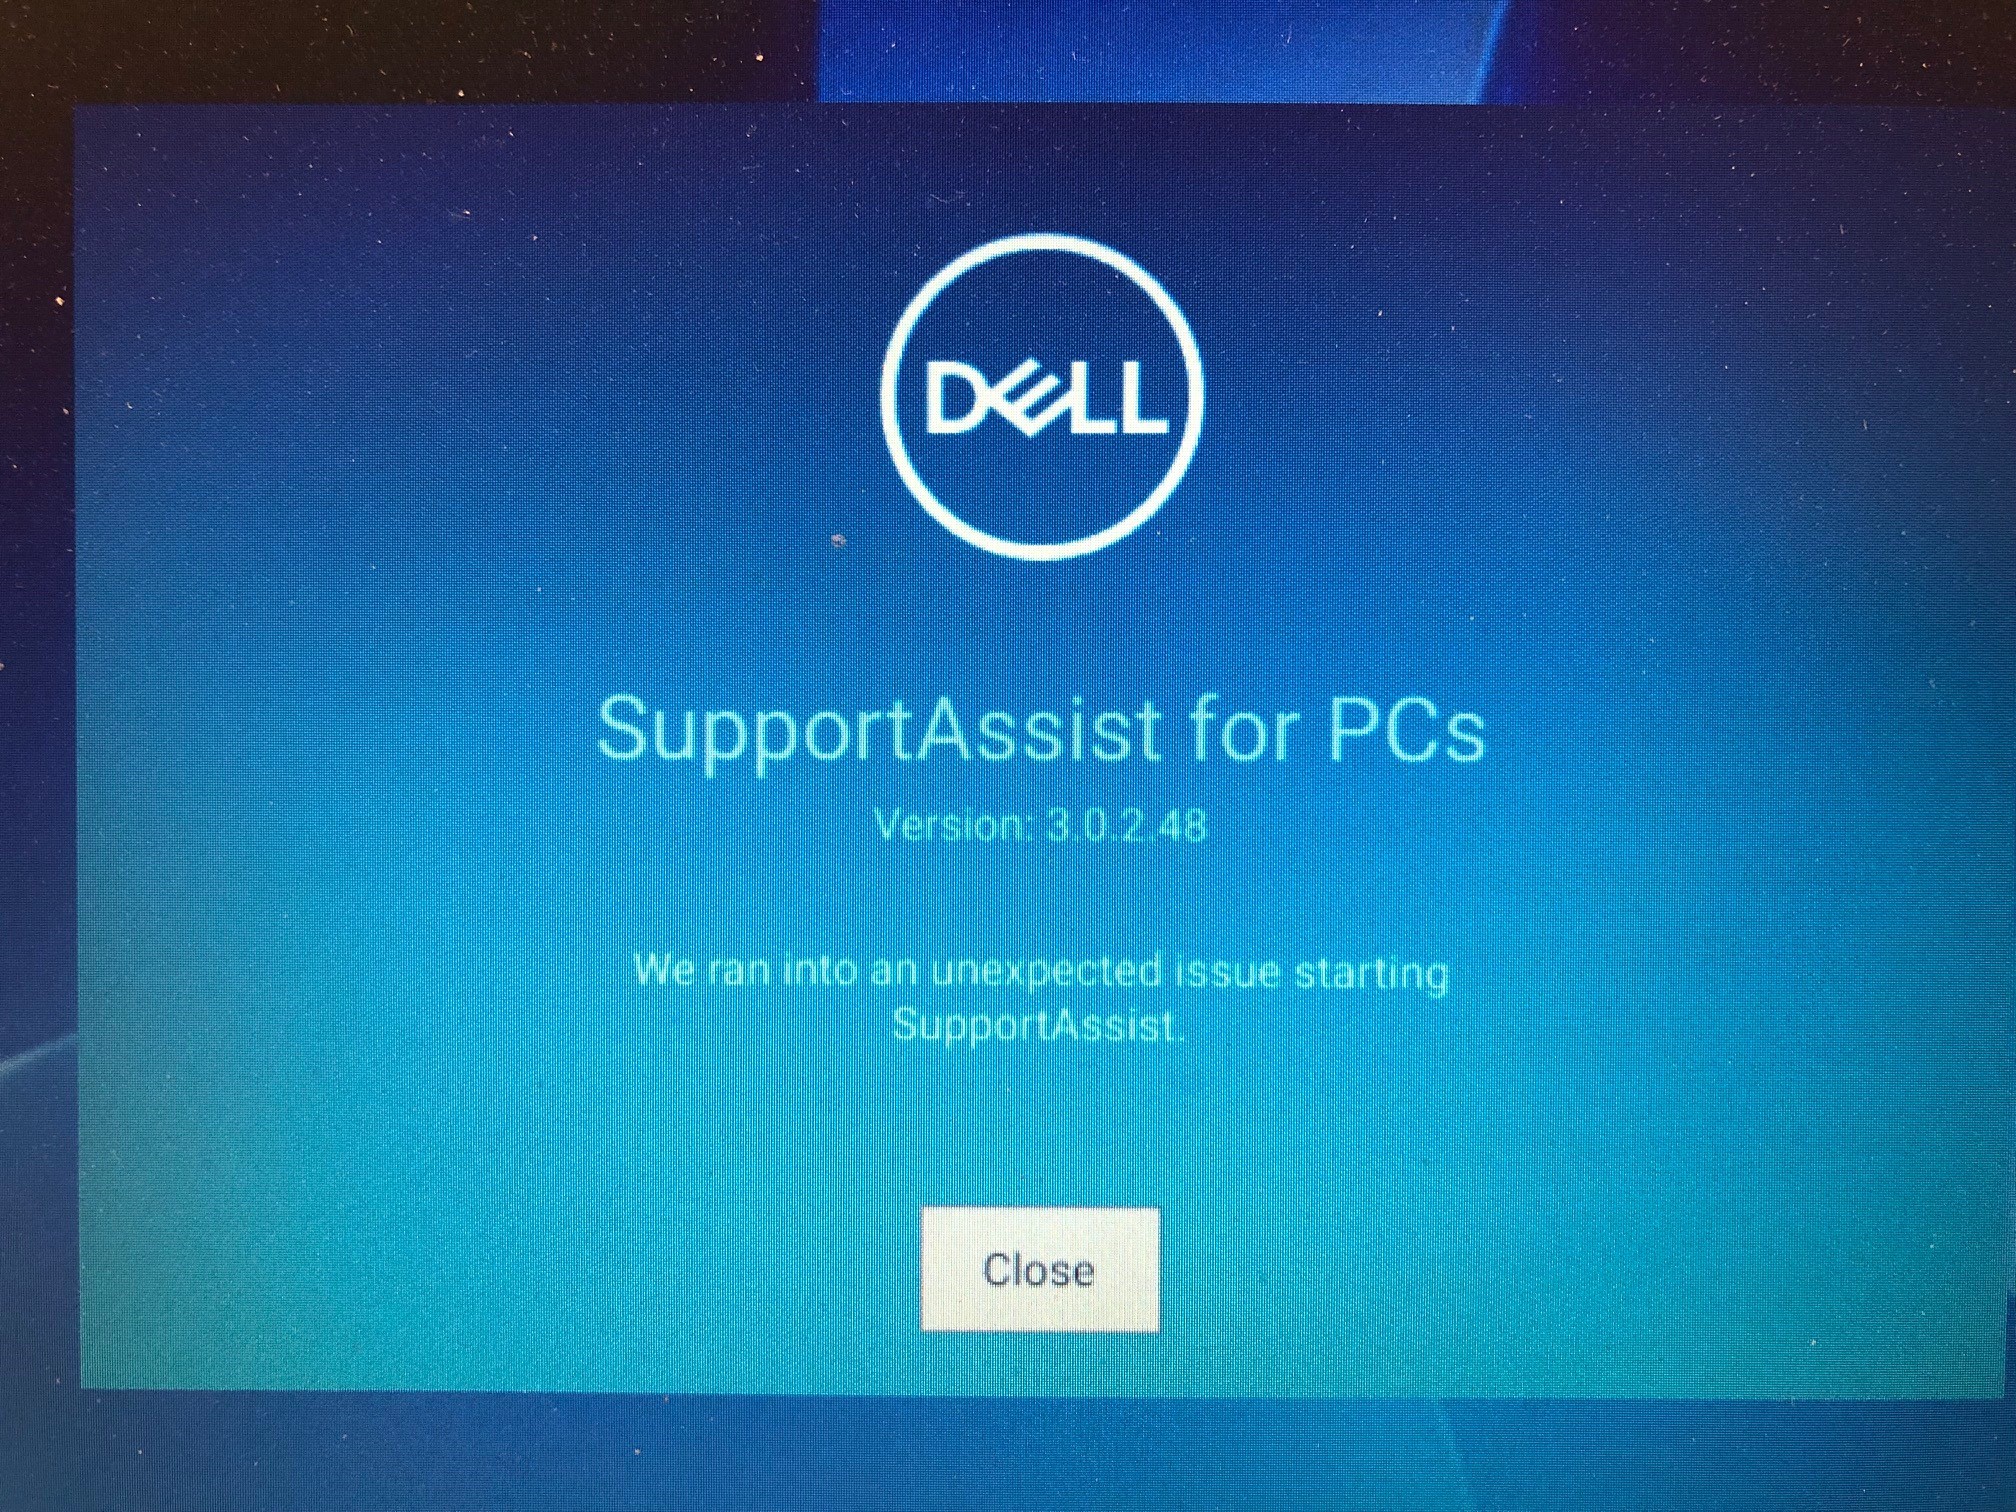 Dell сервис dell support. Dell support Assistant. Dell support assist. Делл суппорт ассистент. Программы dell.